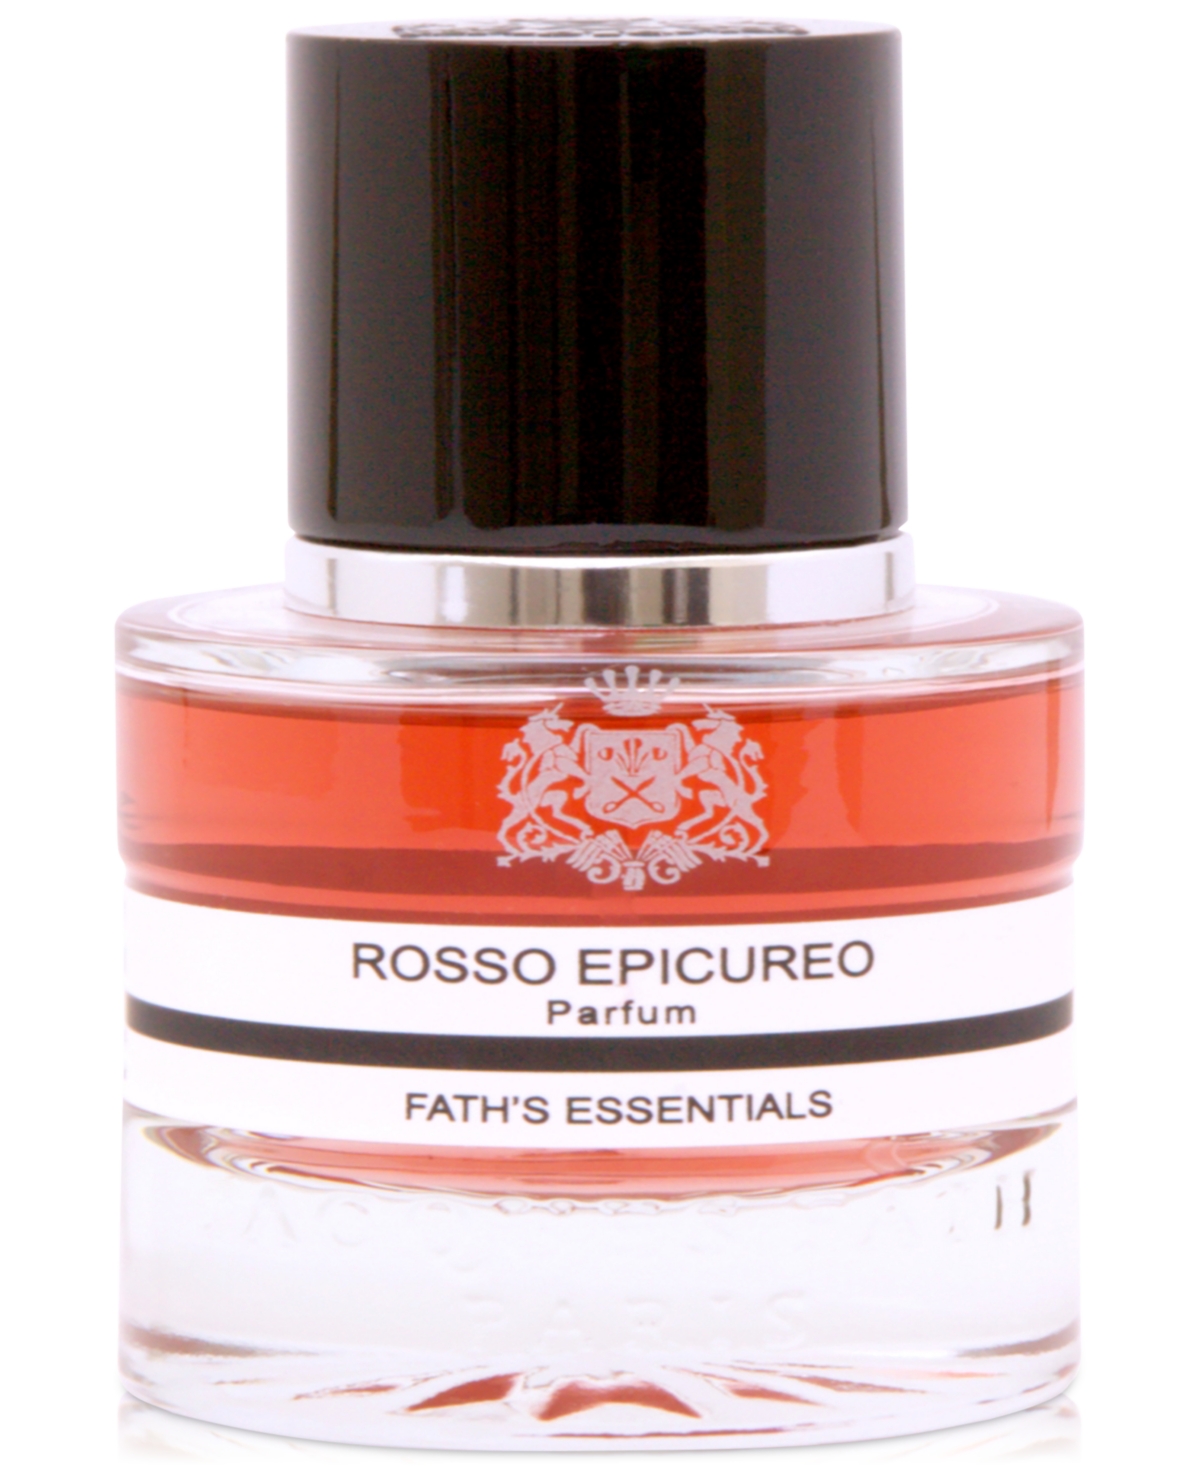 Rosso Epicureo Parfum, 1.7 oz.